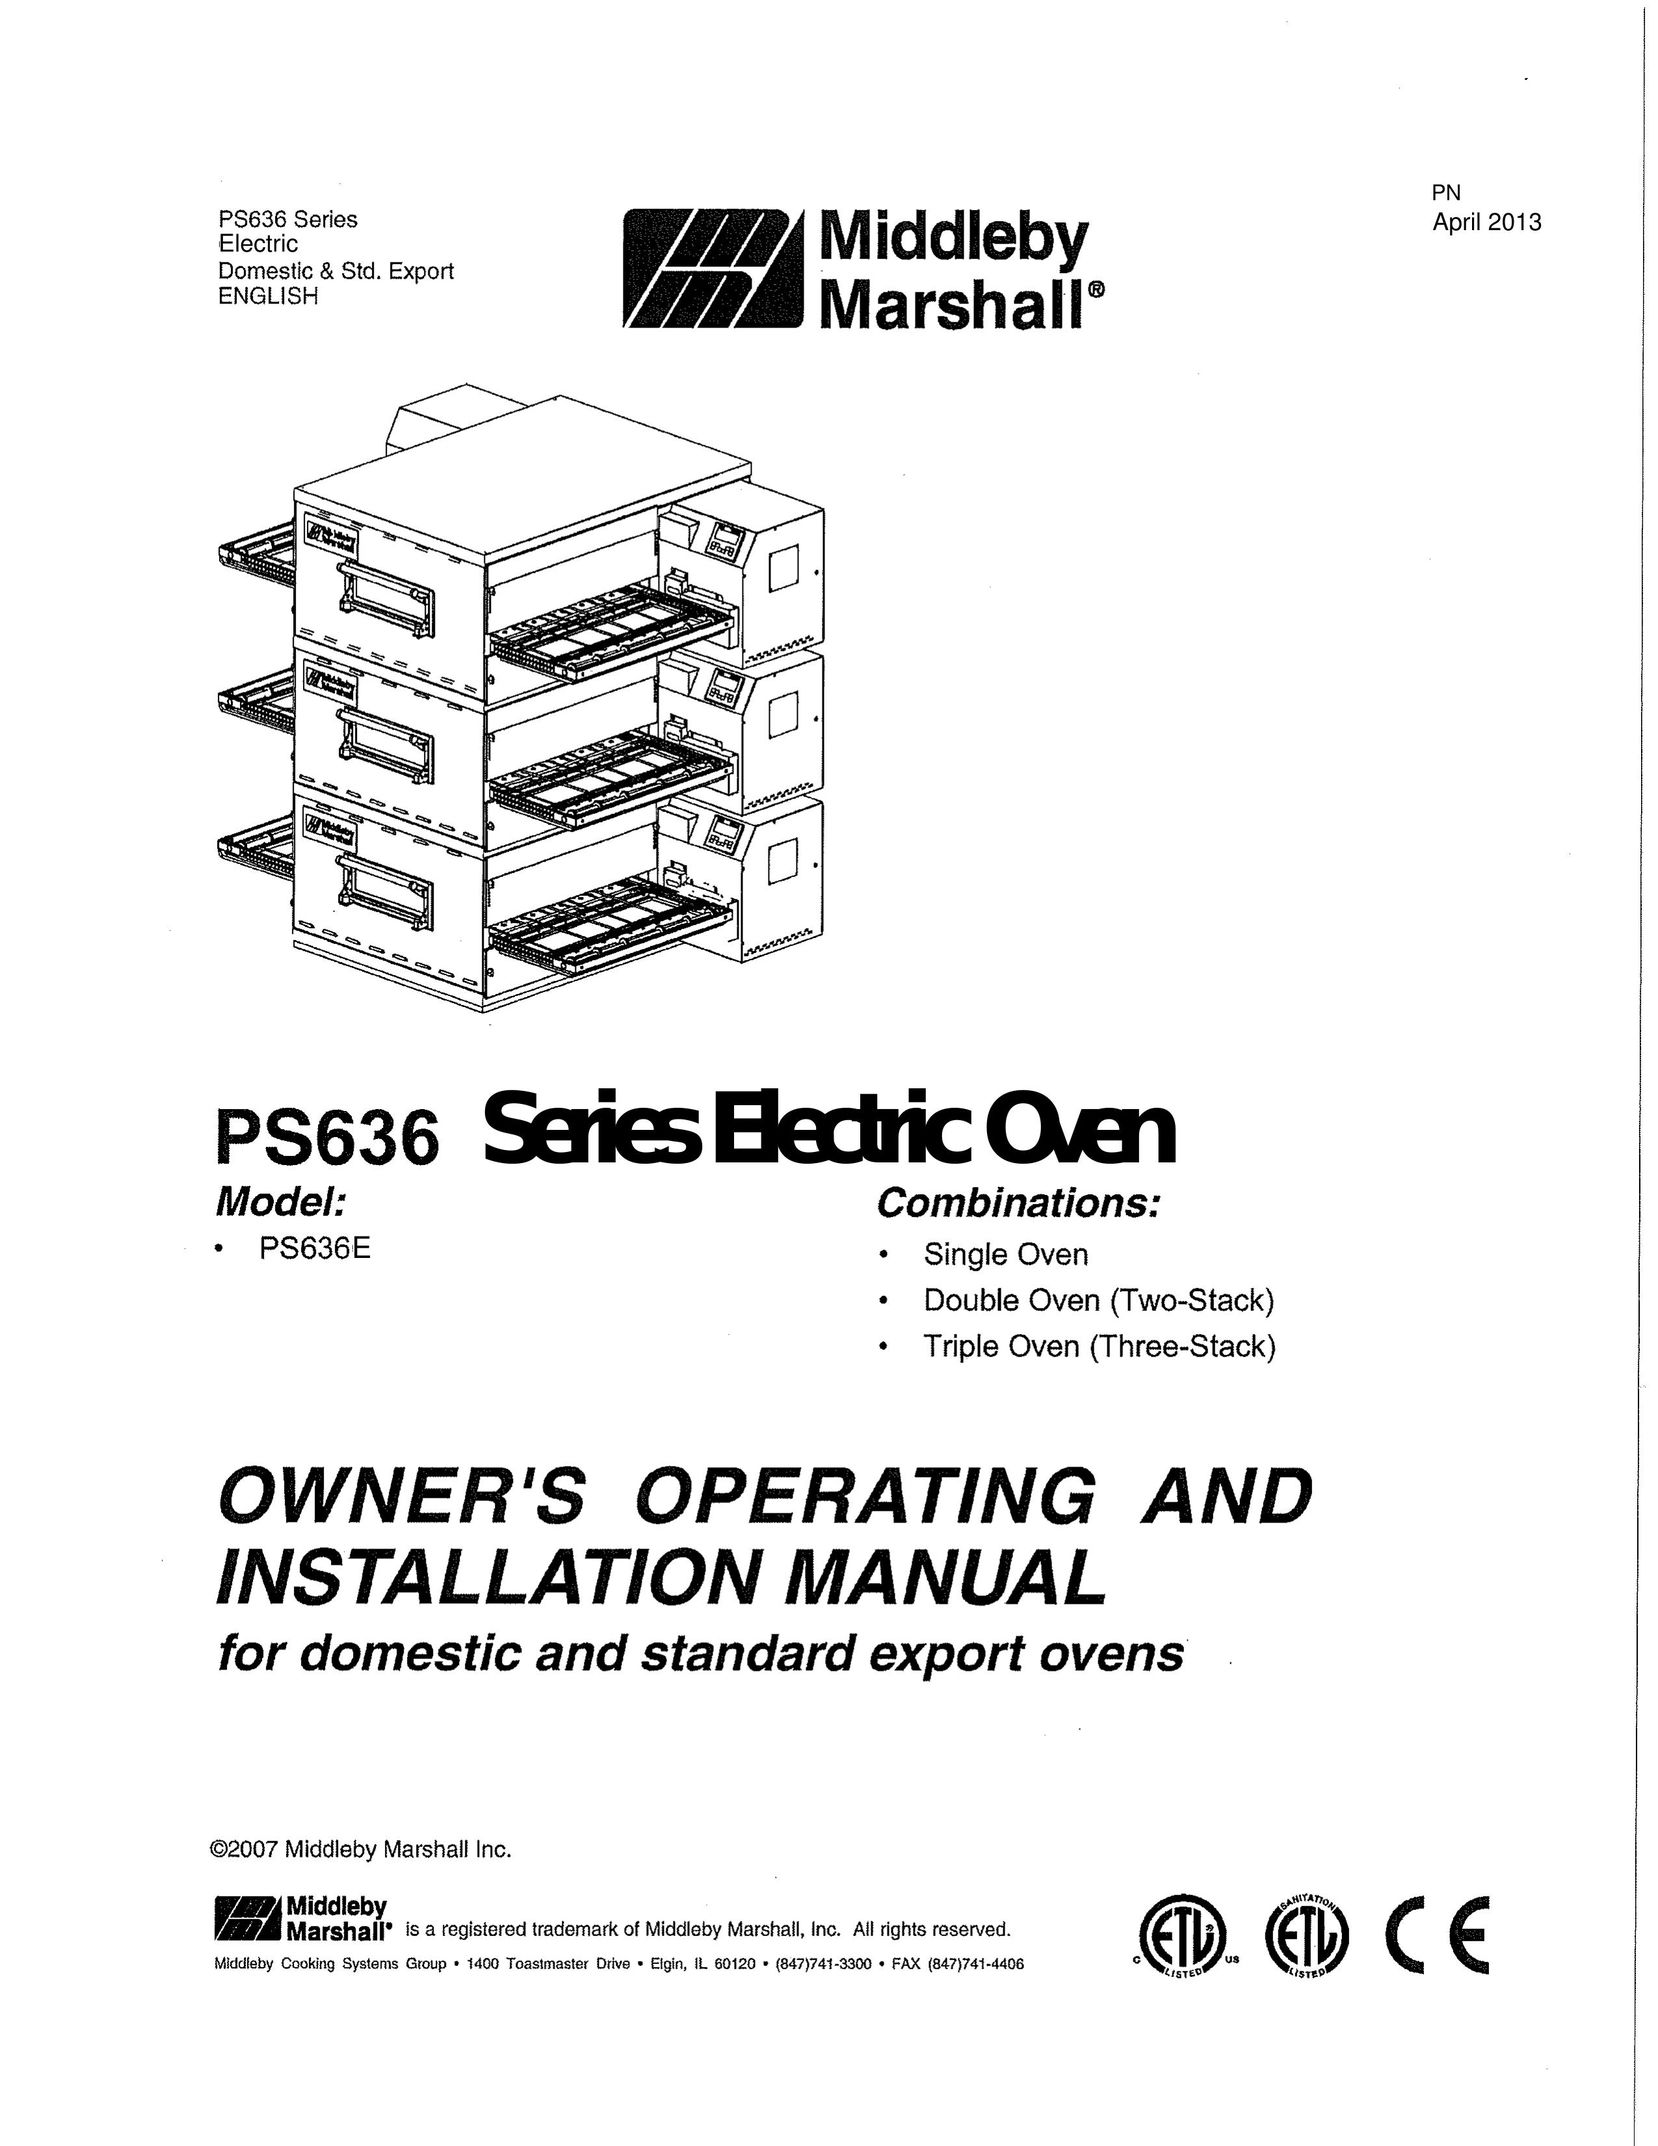 Middleby Marshall PS636 Range User Manual